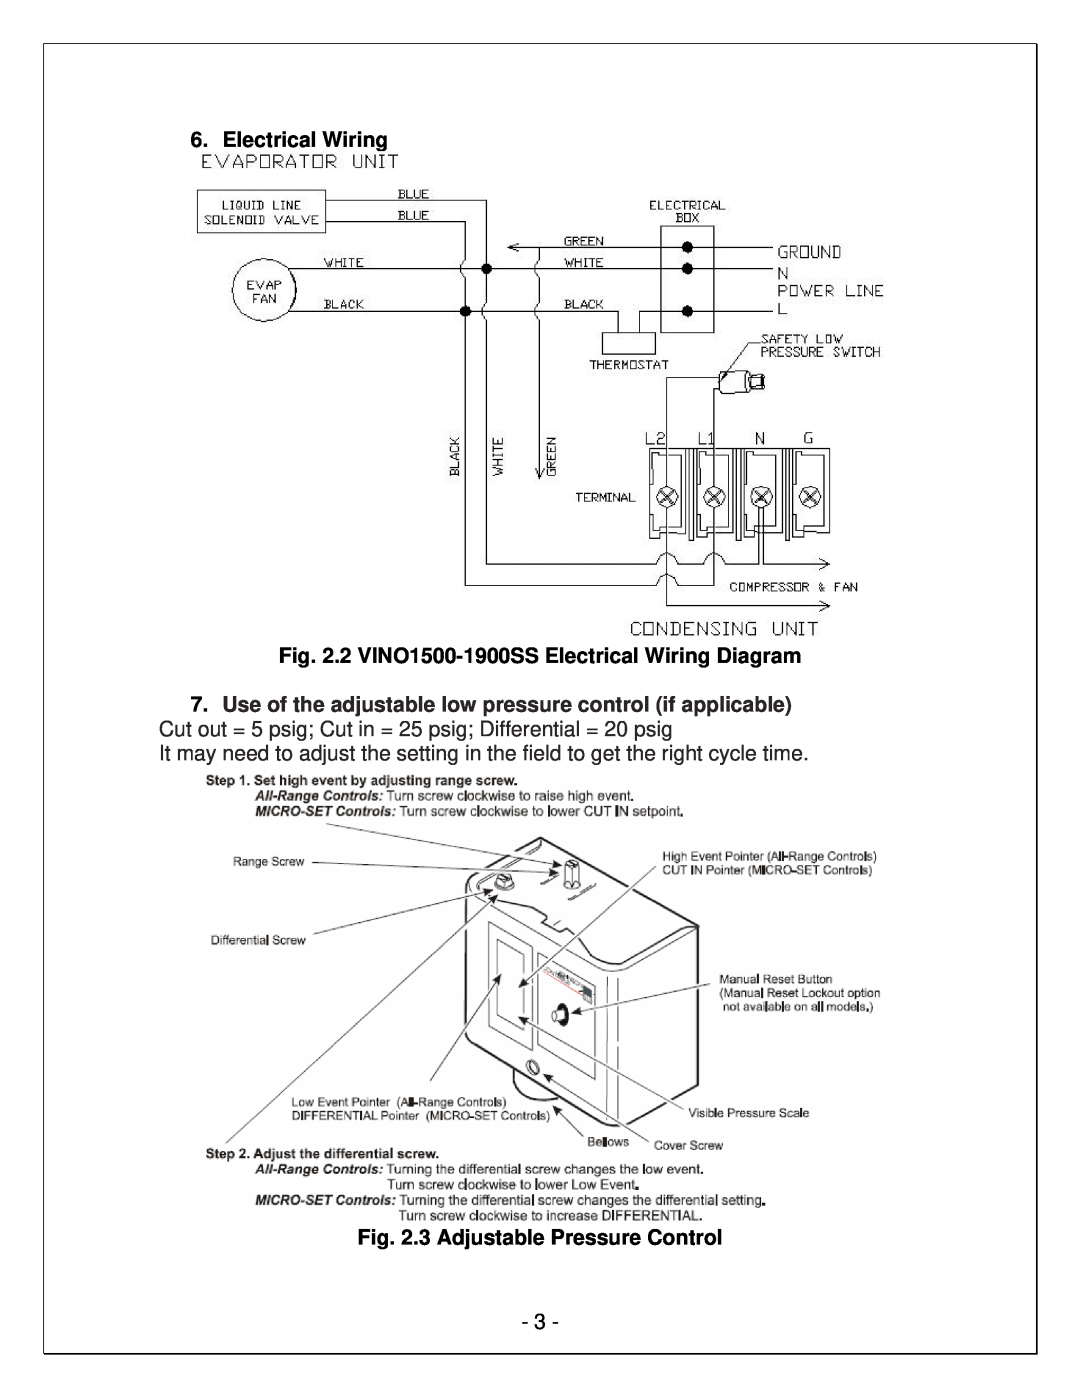 Vinotemp VINO-1900SS, VINO-1500SS manual 2 VINO1500-1900SSElectrical Wiring Diagram, 3 Adjustable Pressure Control 